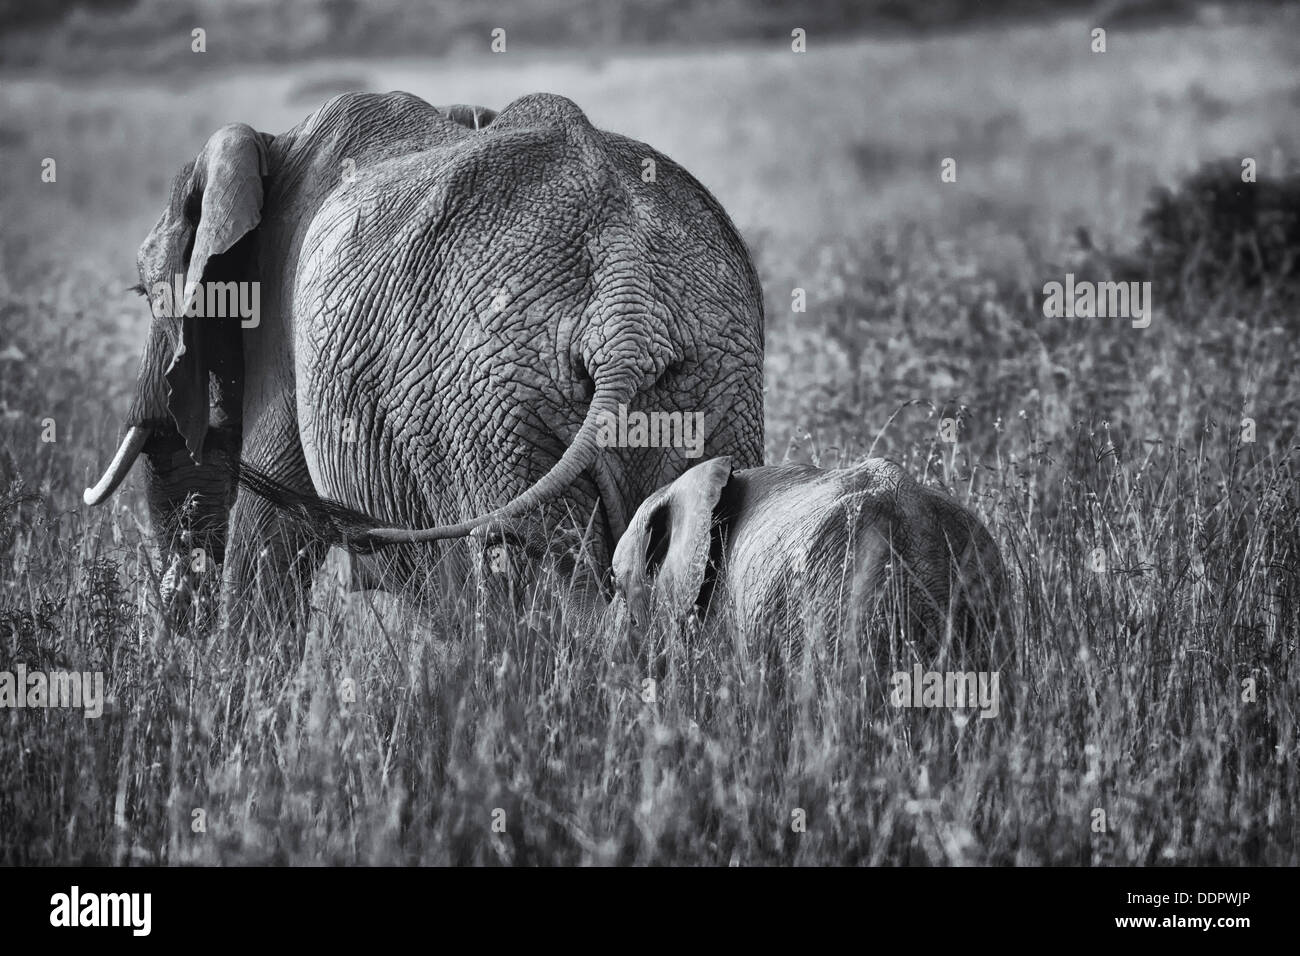 Monochrome close up of elephant mother and baby rear view walking through grass, Maasai Mara, Kenya Stock Photo